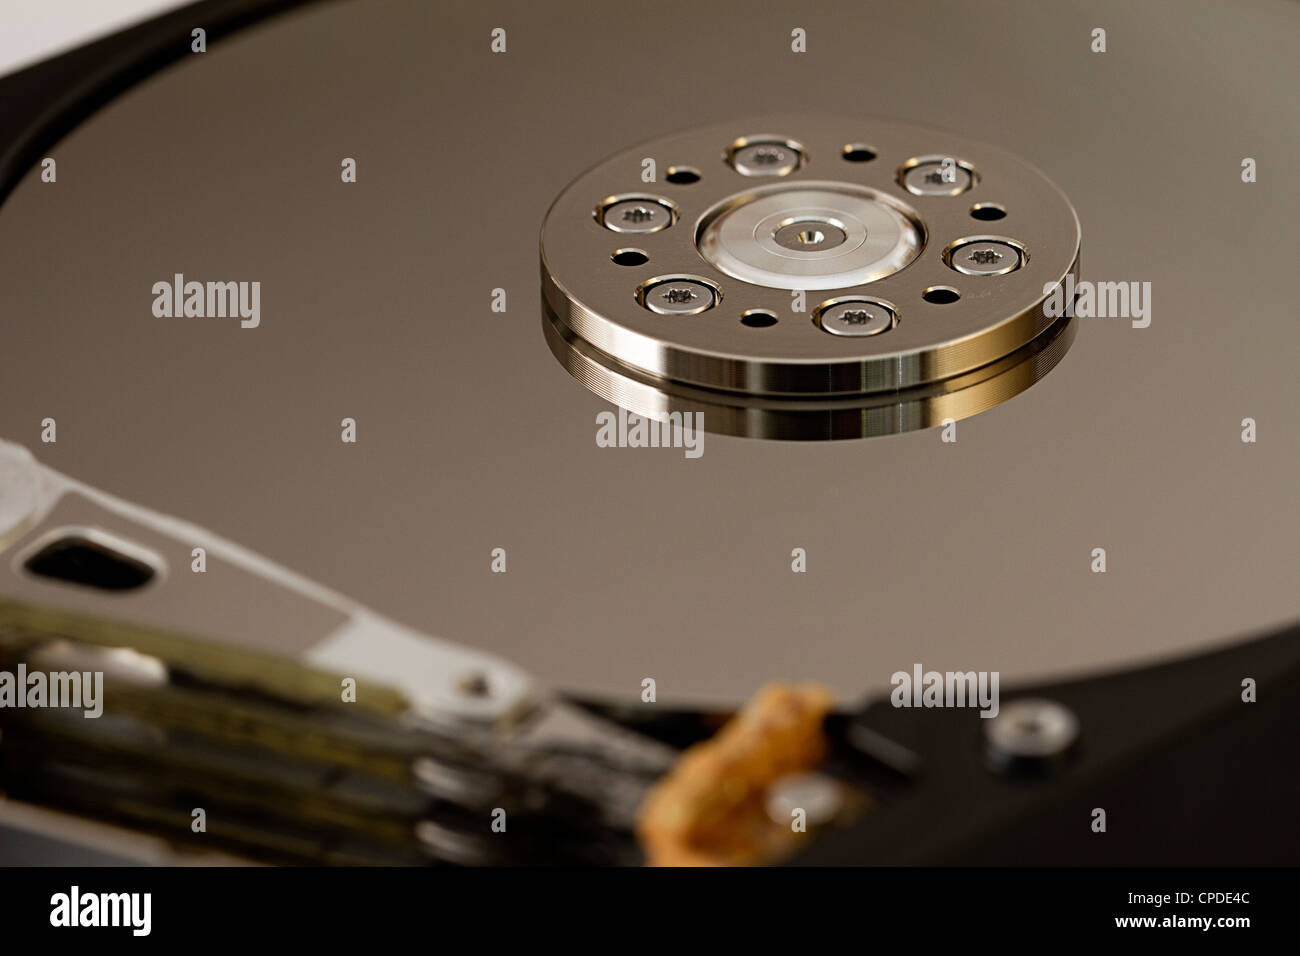 platter of open hard disk drive revealed Stock Photo